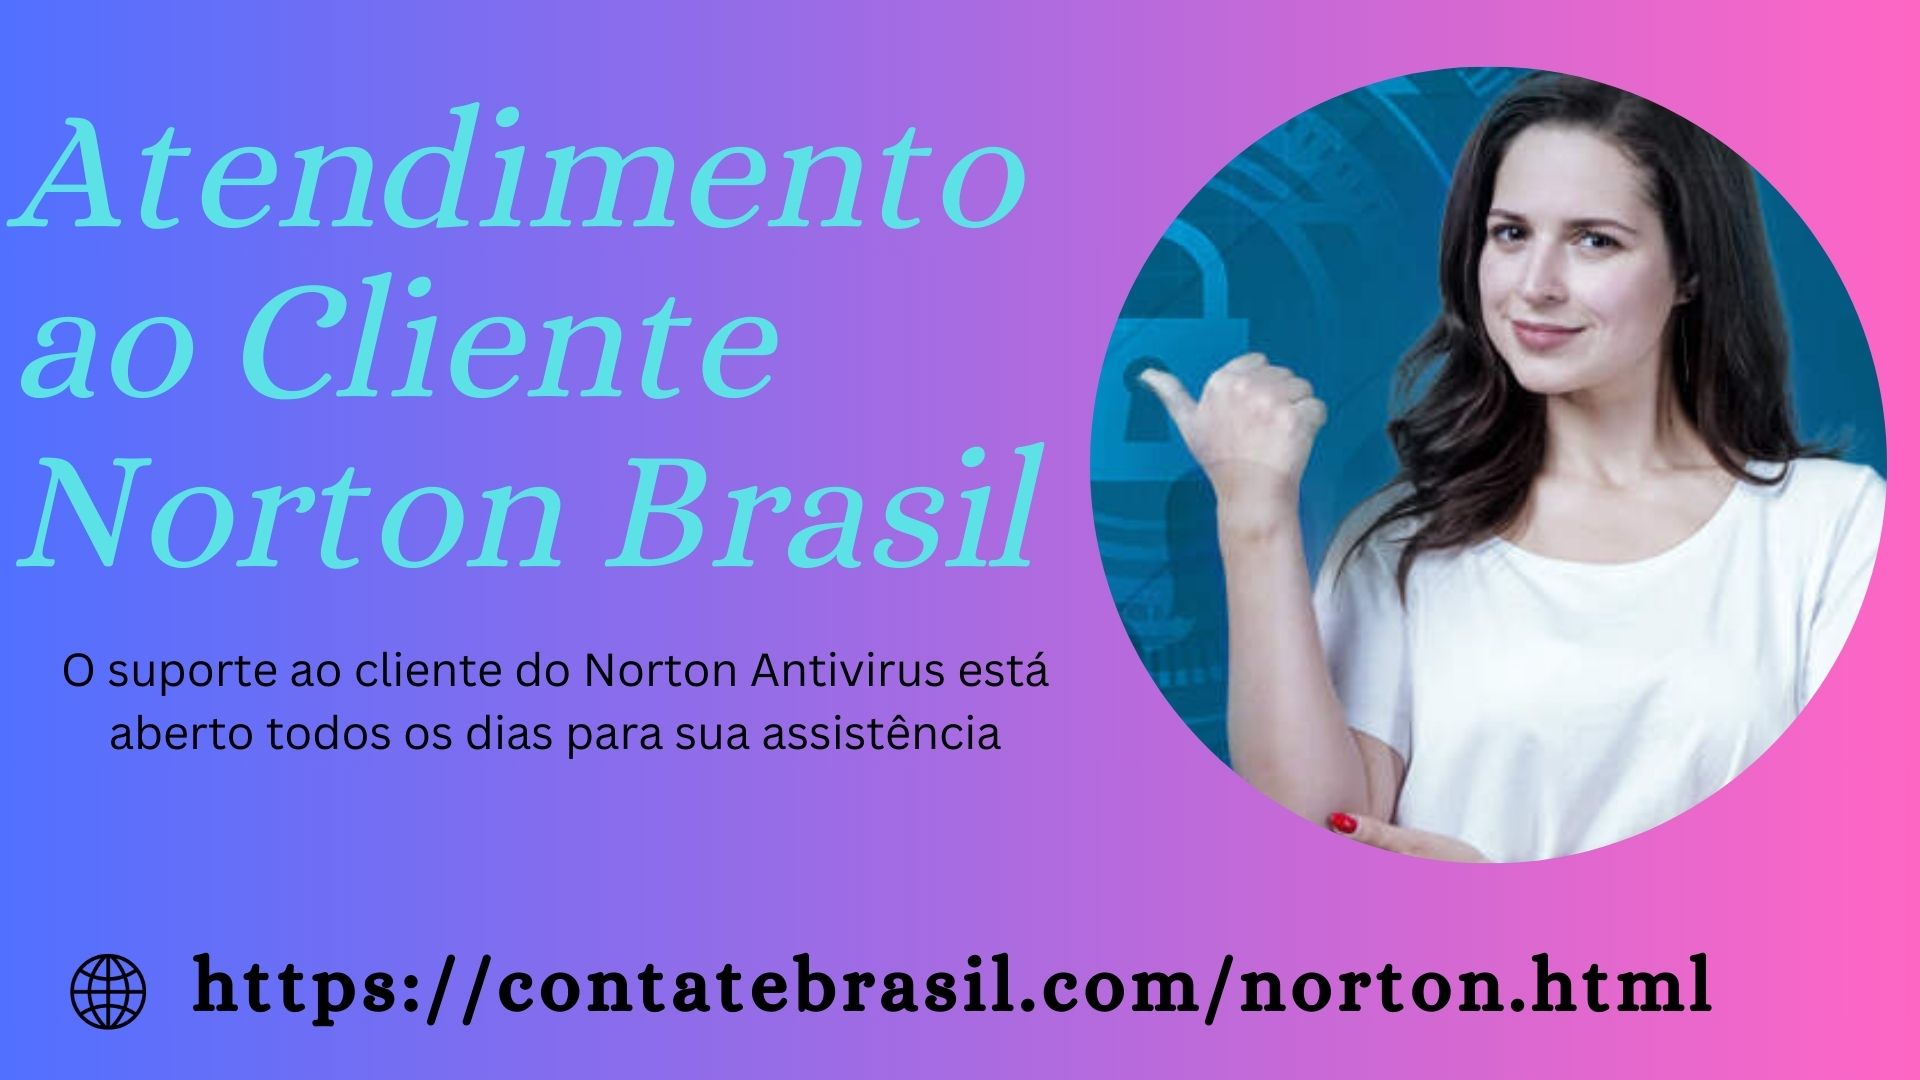 Como atualizar os detalhes de pagamento na sua conta Norton? – Atendimento ao Cliente Norton Brasil